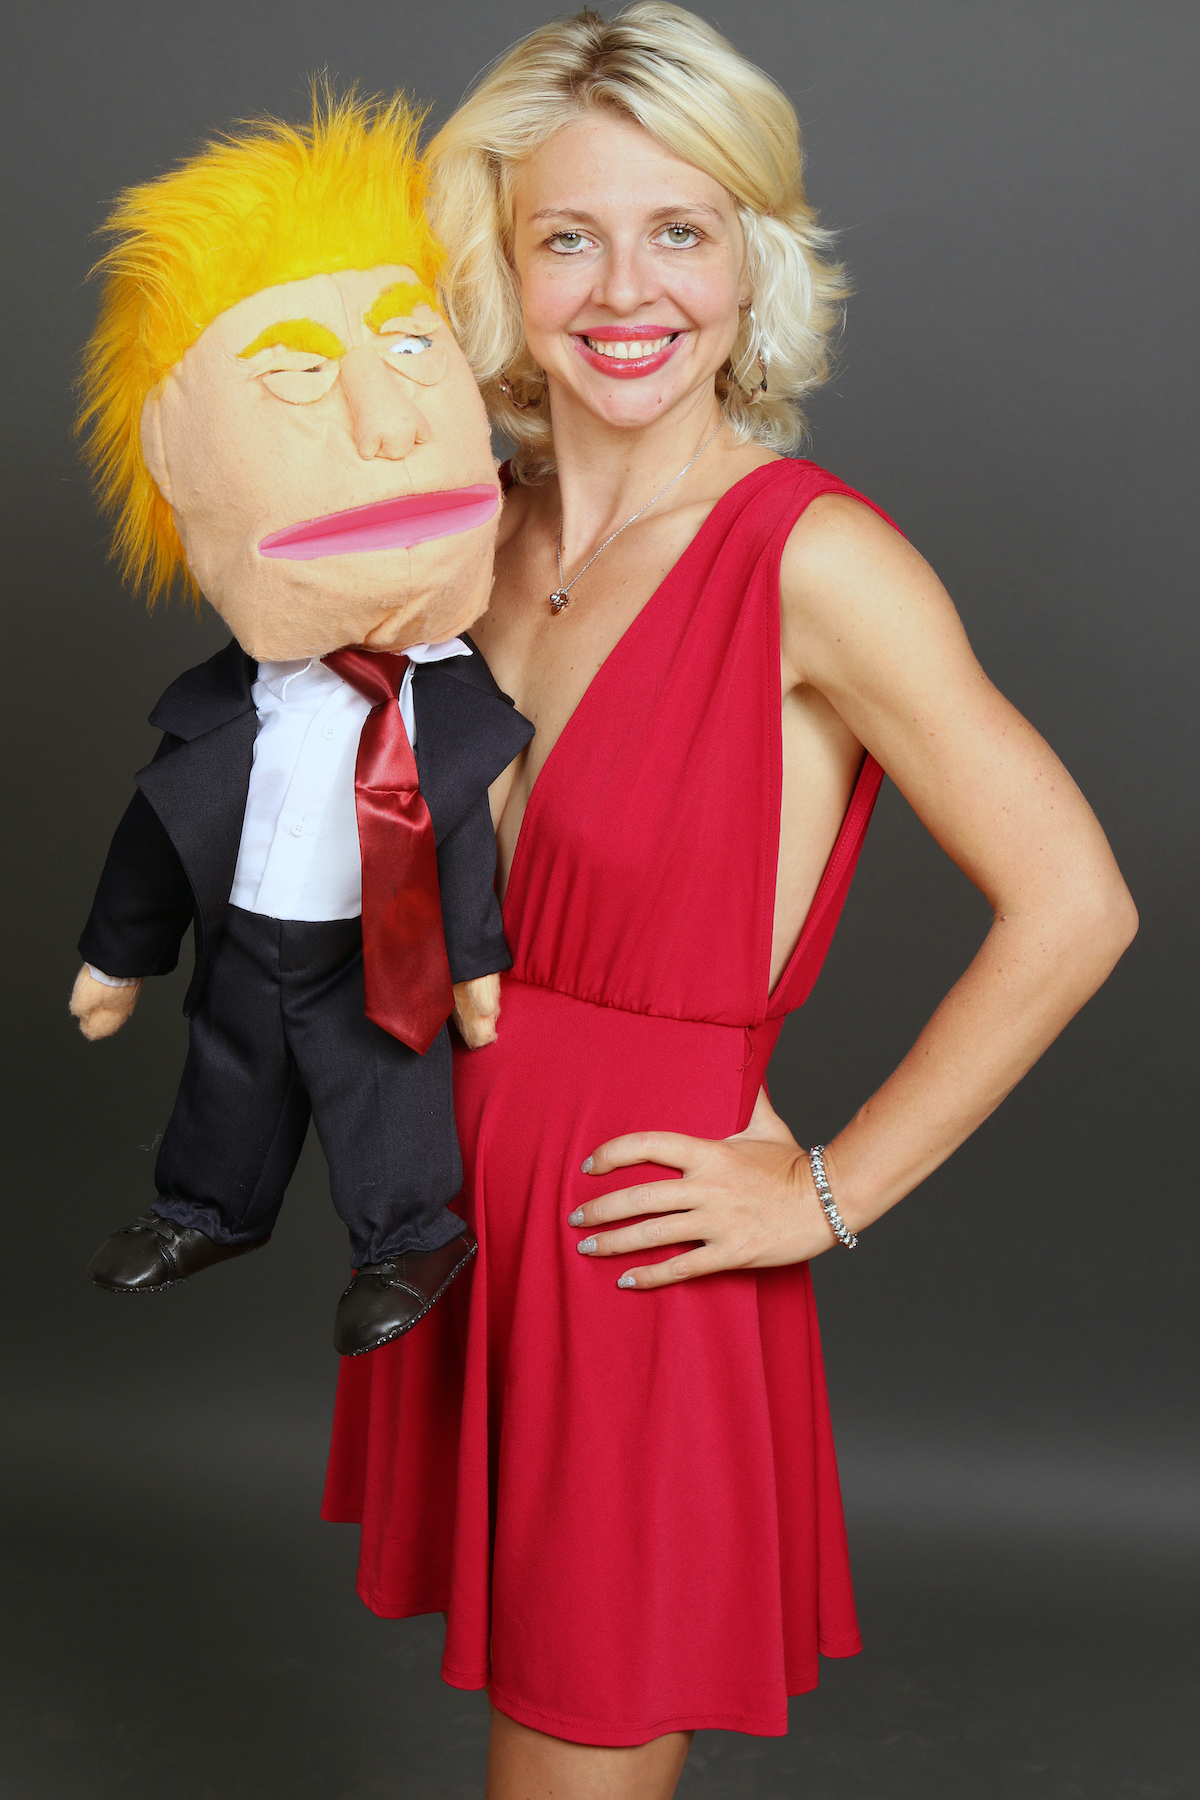 Presidential dummy Donald J. Tramp and TV ventriloquist April Brucker